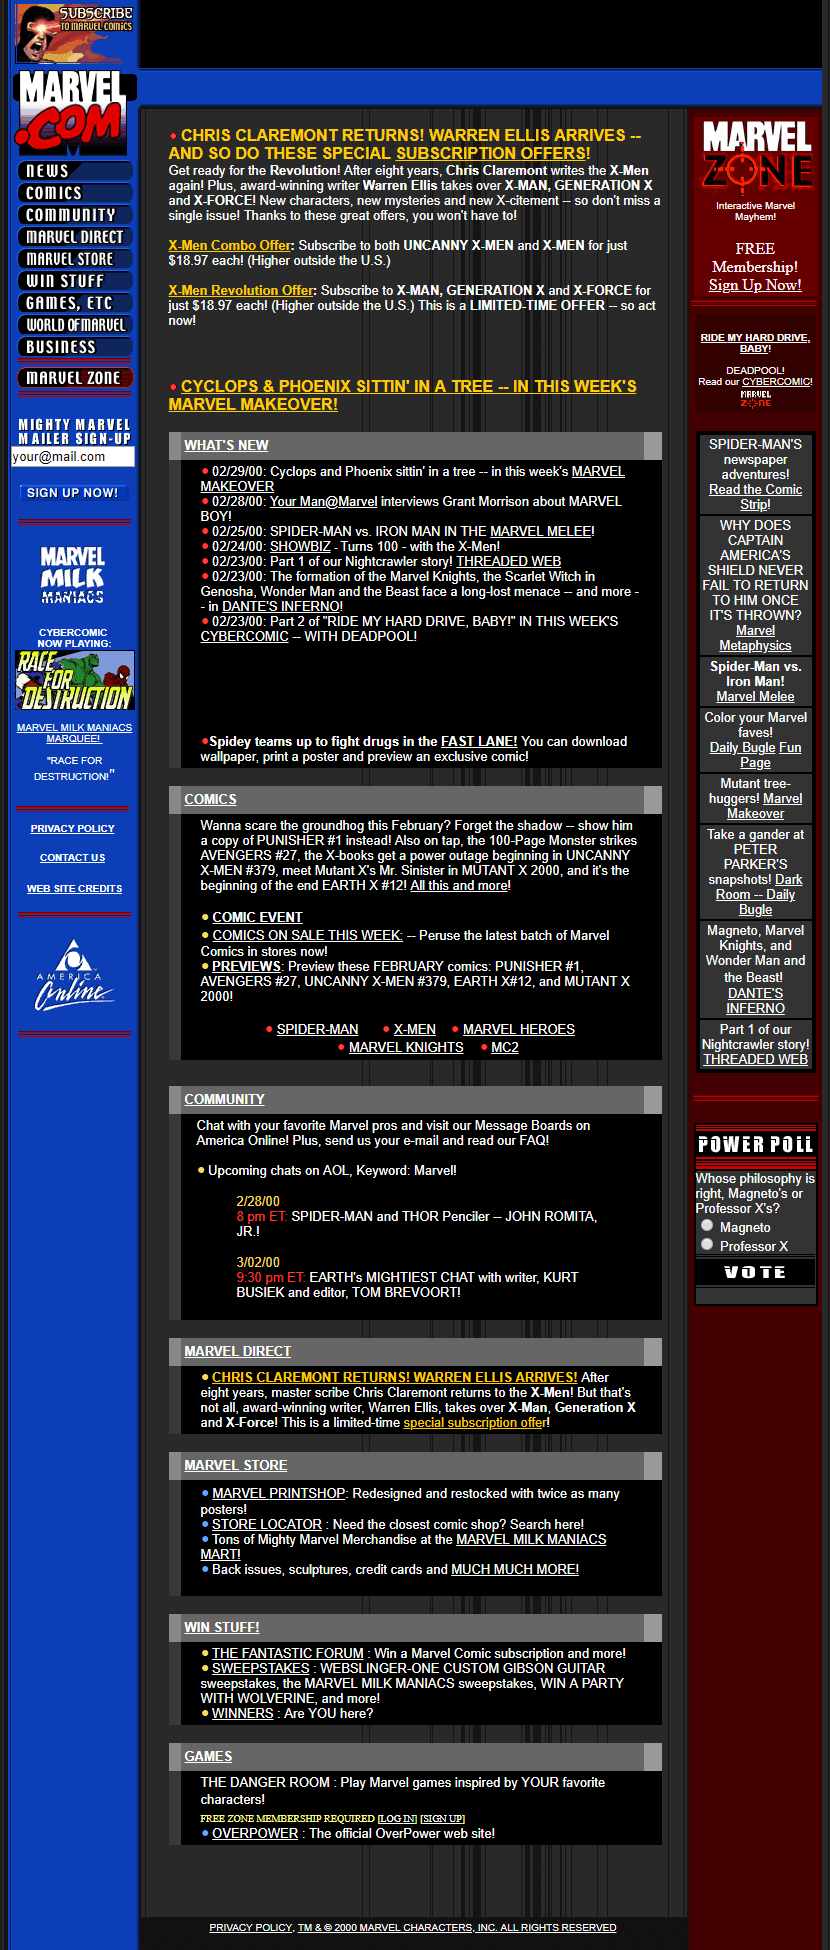 Marvel website in 2000